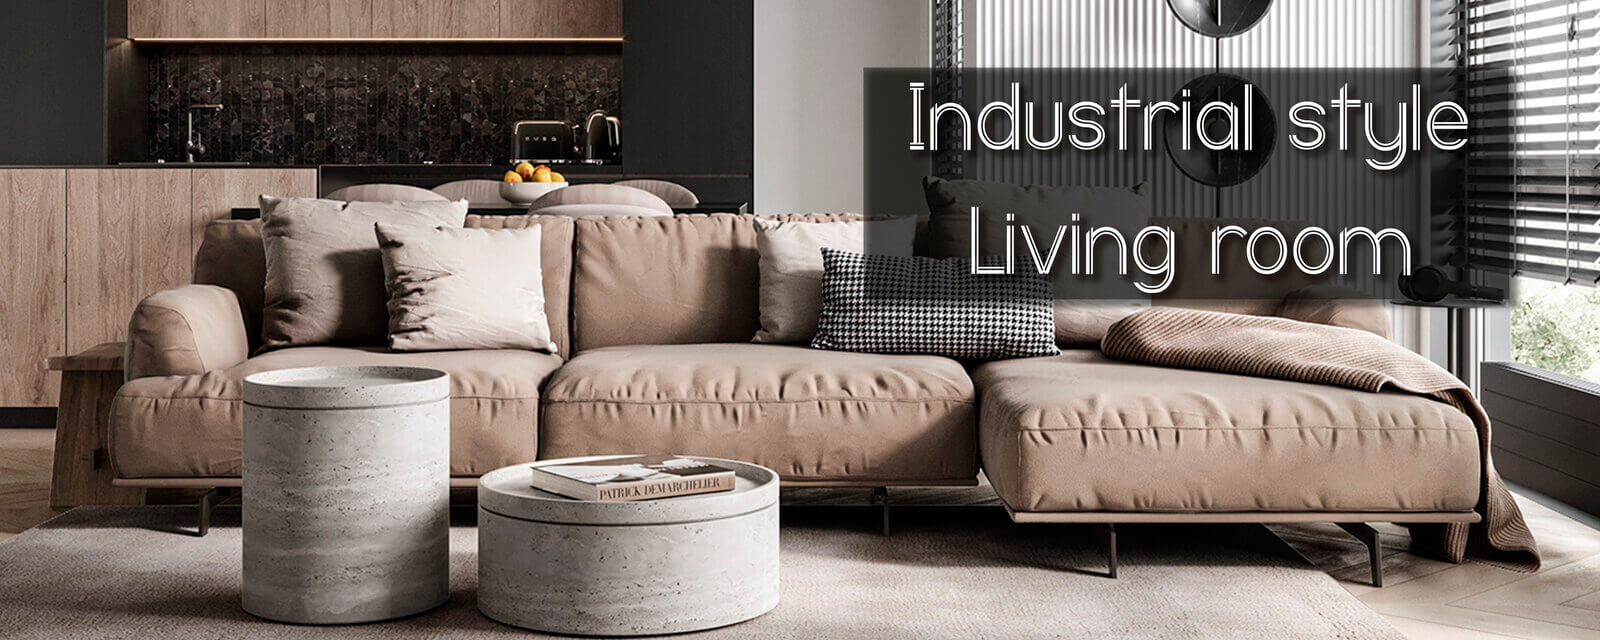 Modern Industrial Living Room